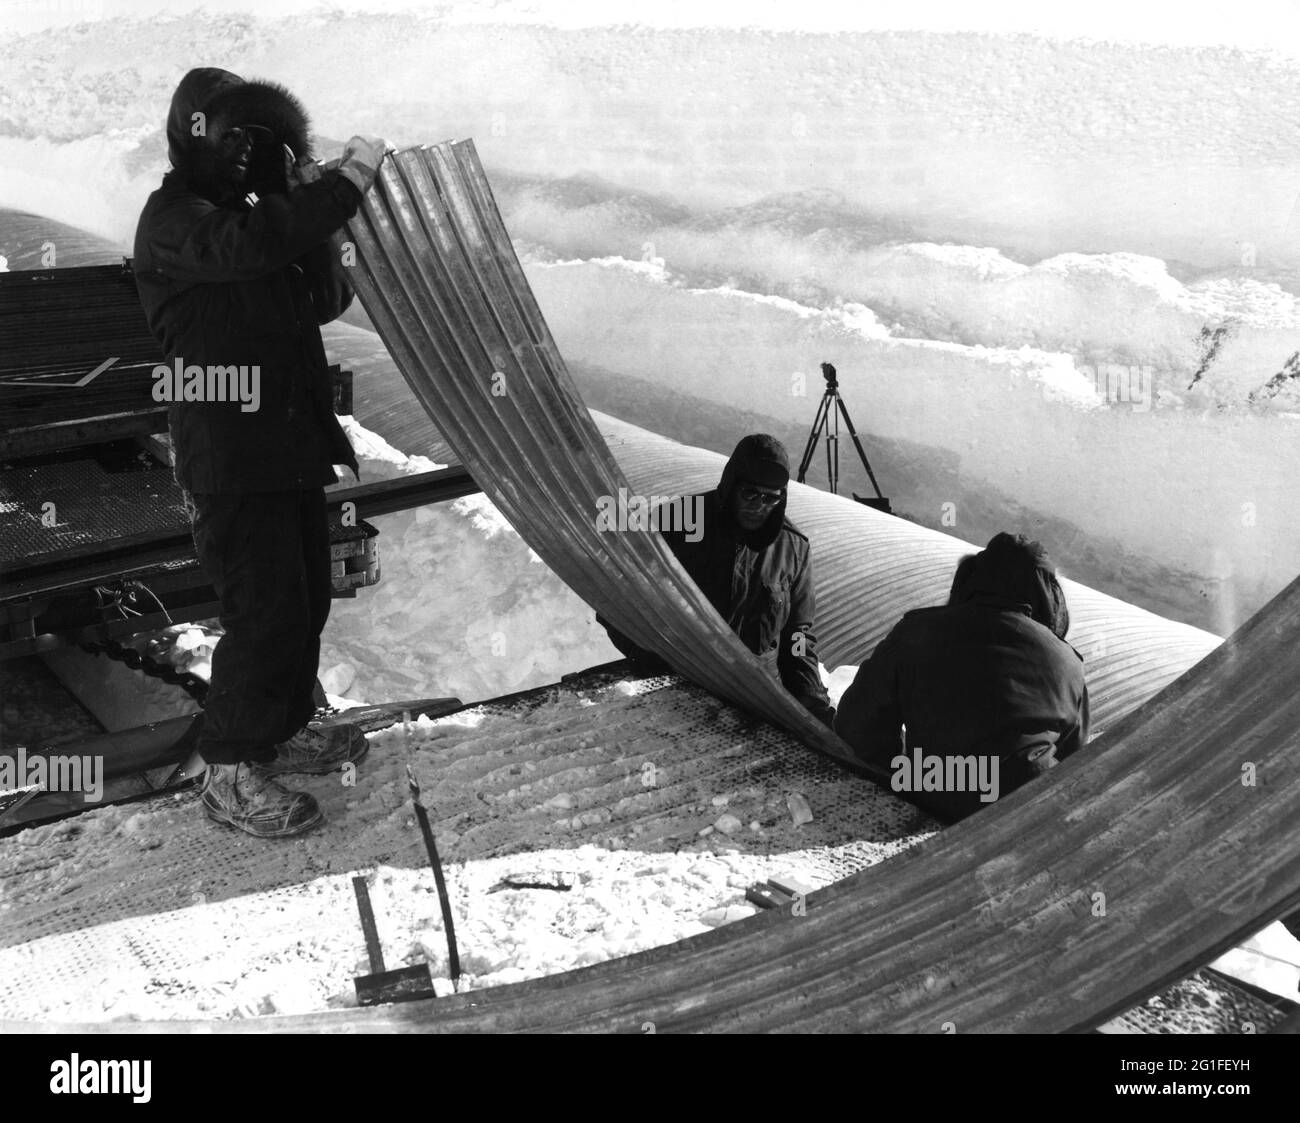 Antarktis, Männer mit gebogenem Wellblech, Forschungsstation der US-Marine, New Byrd Station, ZUSÄTZLICHE RECHTE-CLEARANCE-INFO-NOT-AVAILABLE Stockfoto